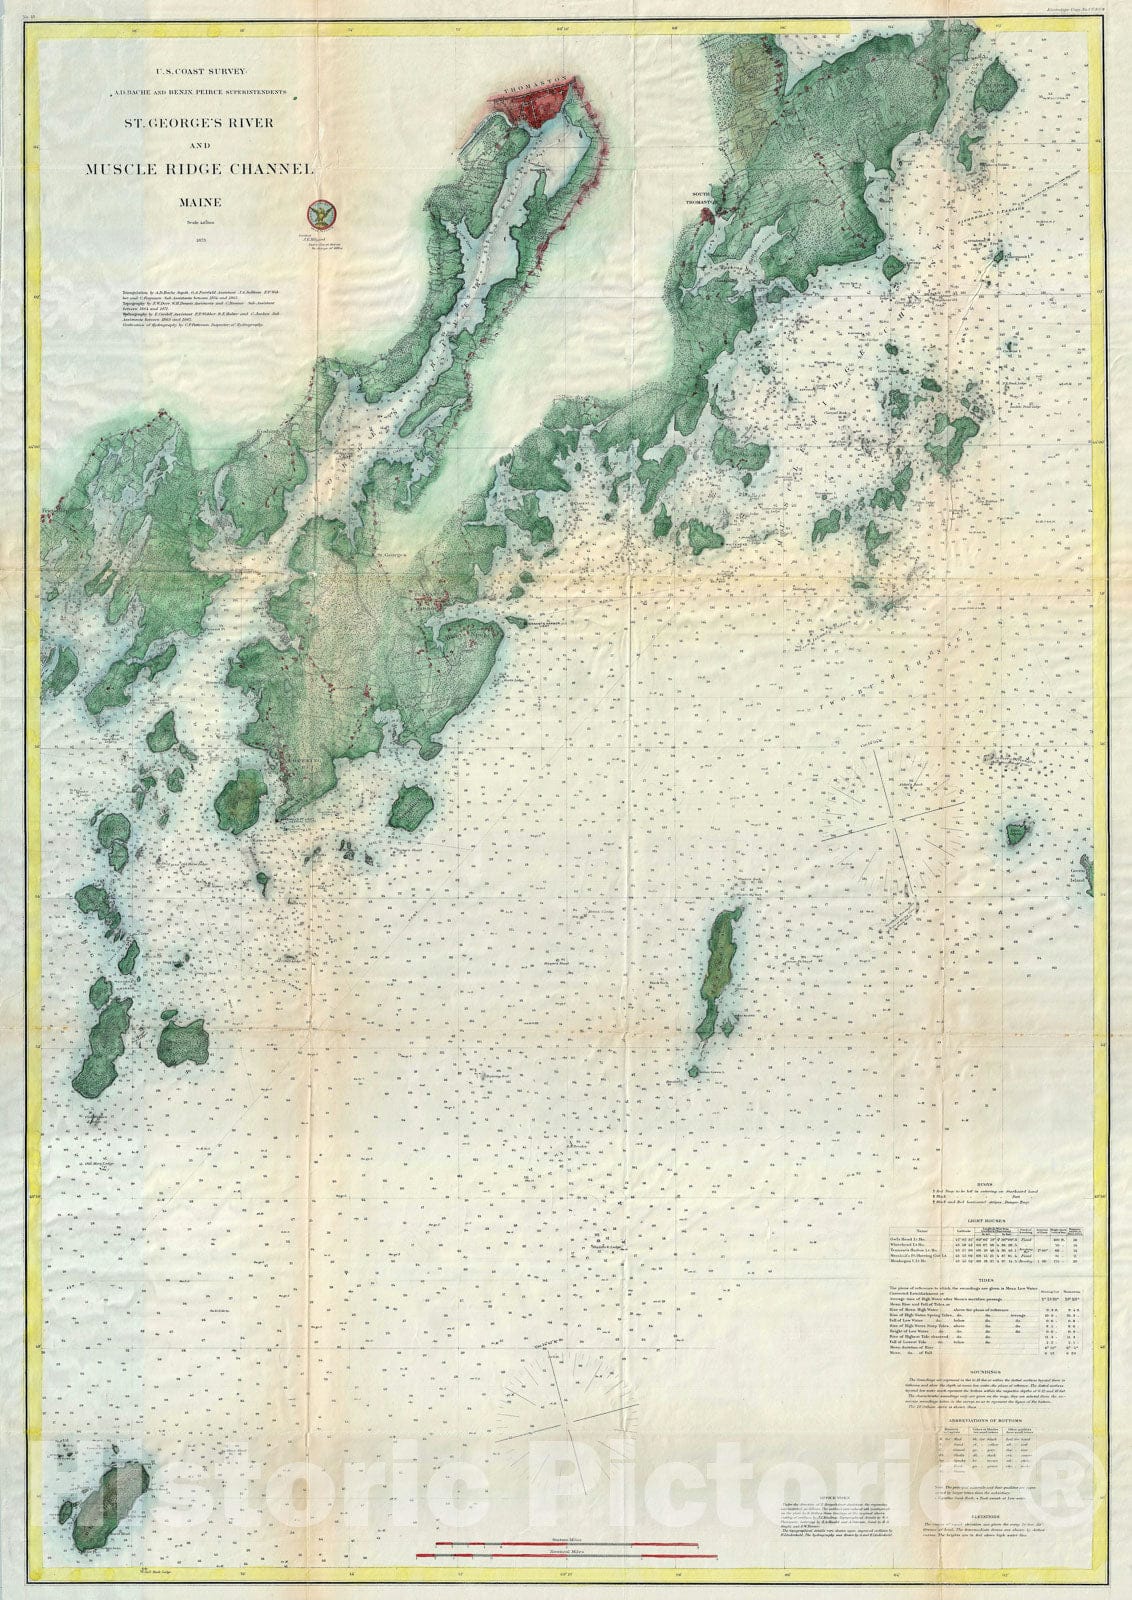 Historic Map : Muscle Ridge Channel, St. Georges River, Thomaston, Maine, U.S. Coast Survey, 1873, Vintage Wall Art